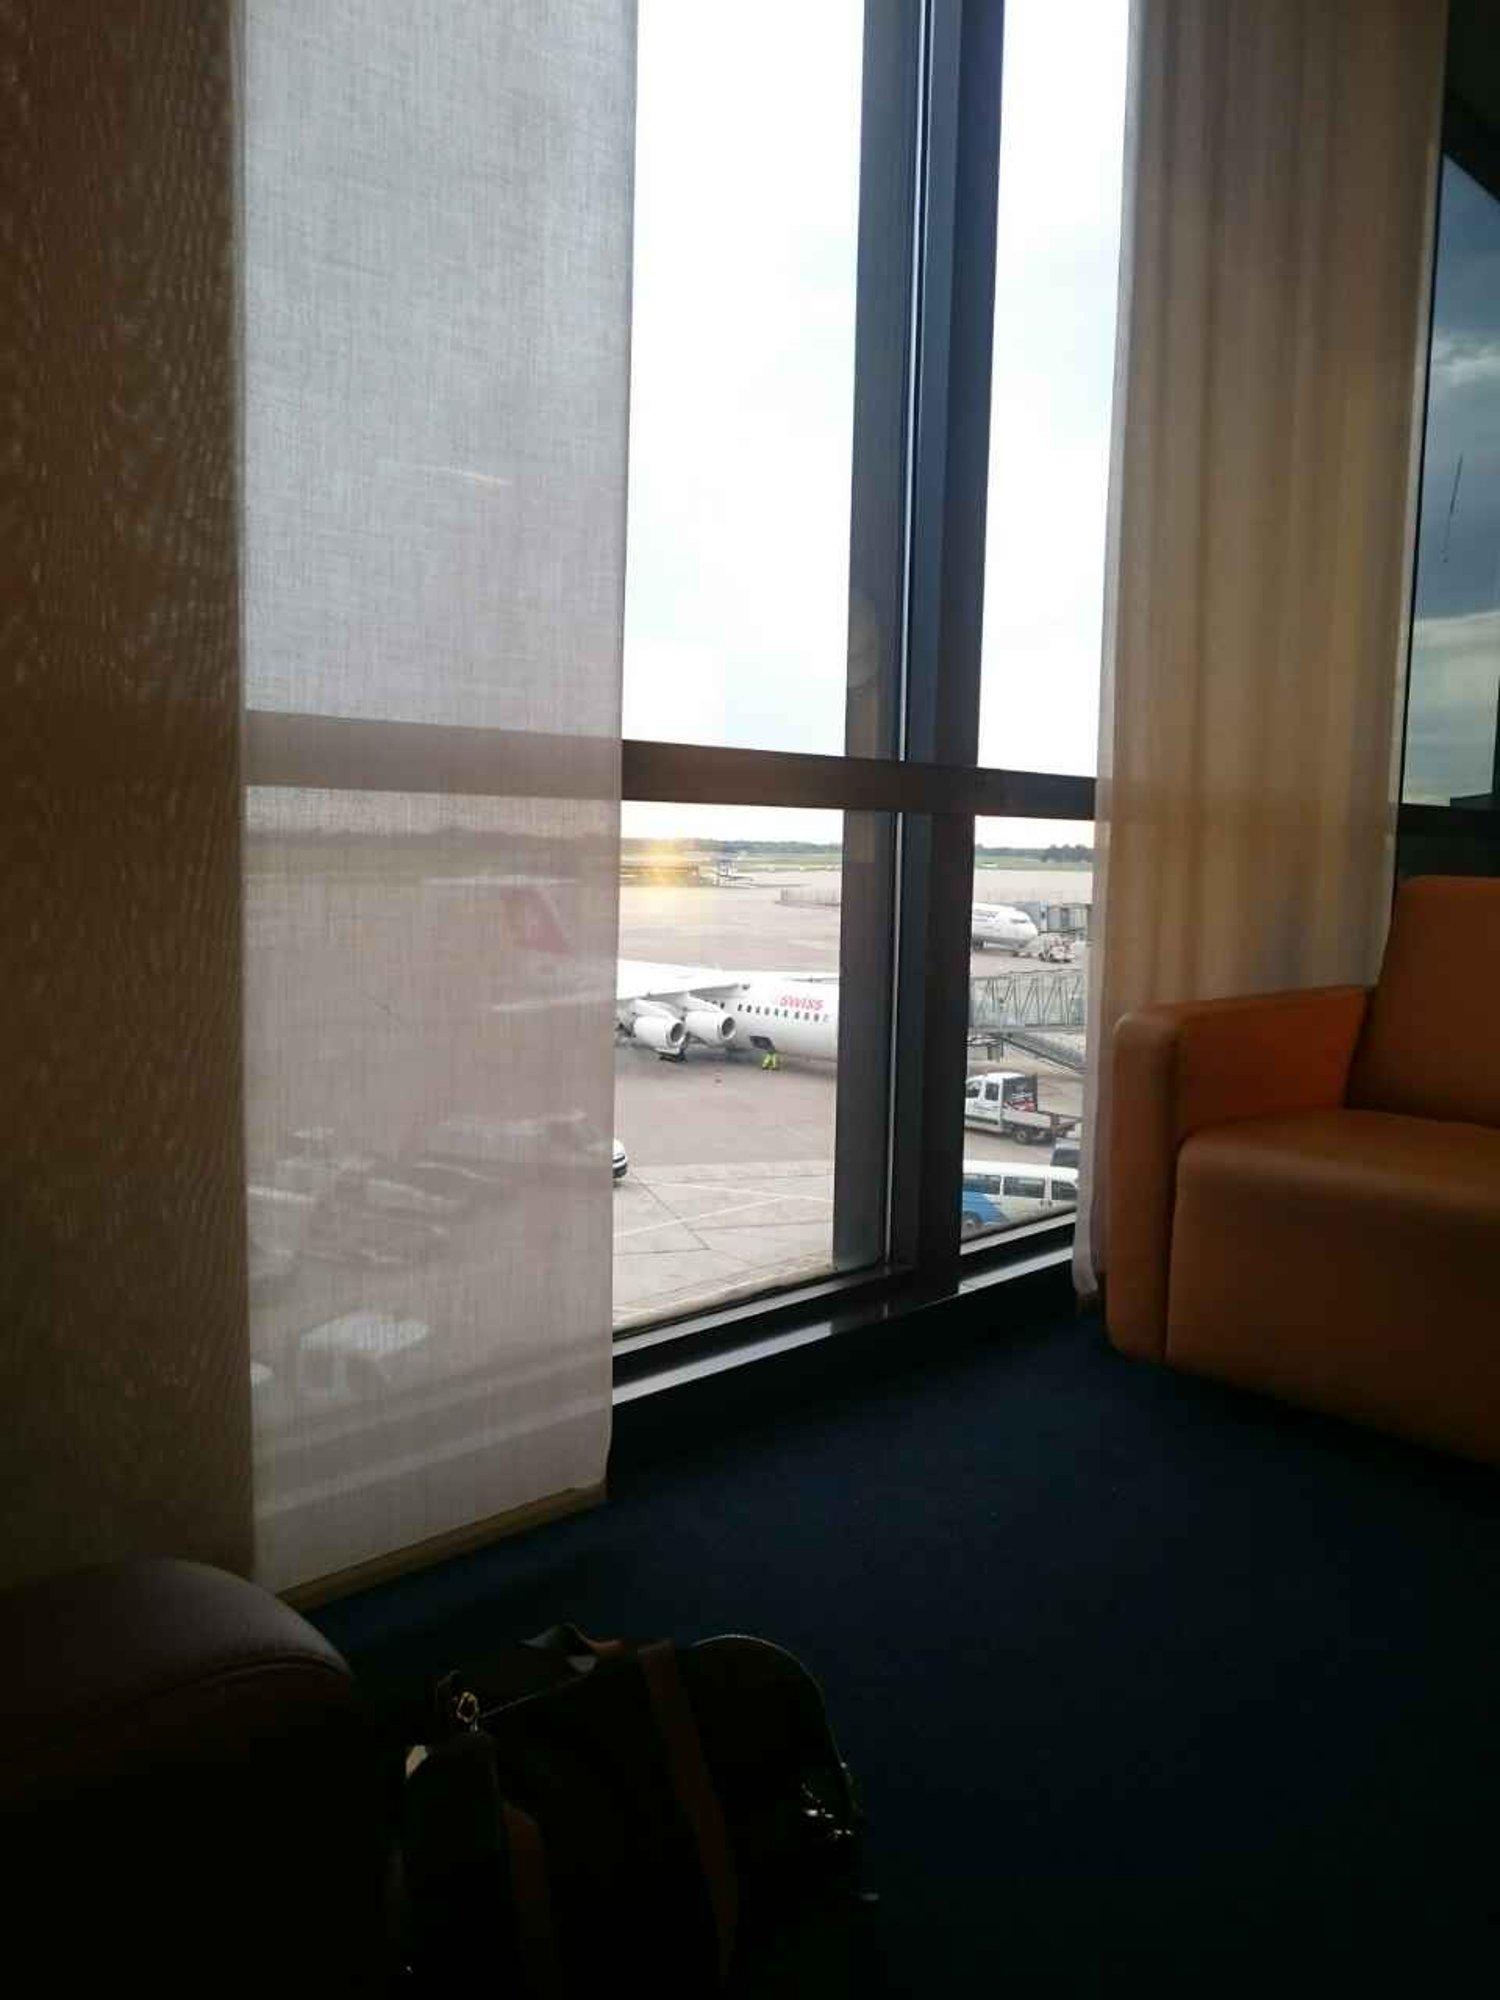 Lufthansa Senator Lounge image 5 of 6